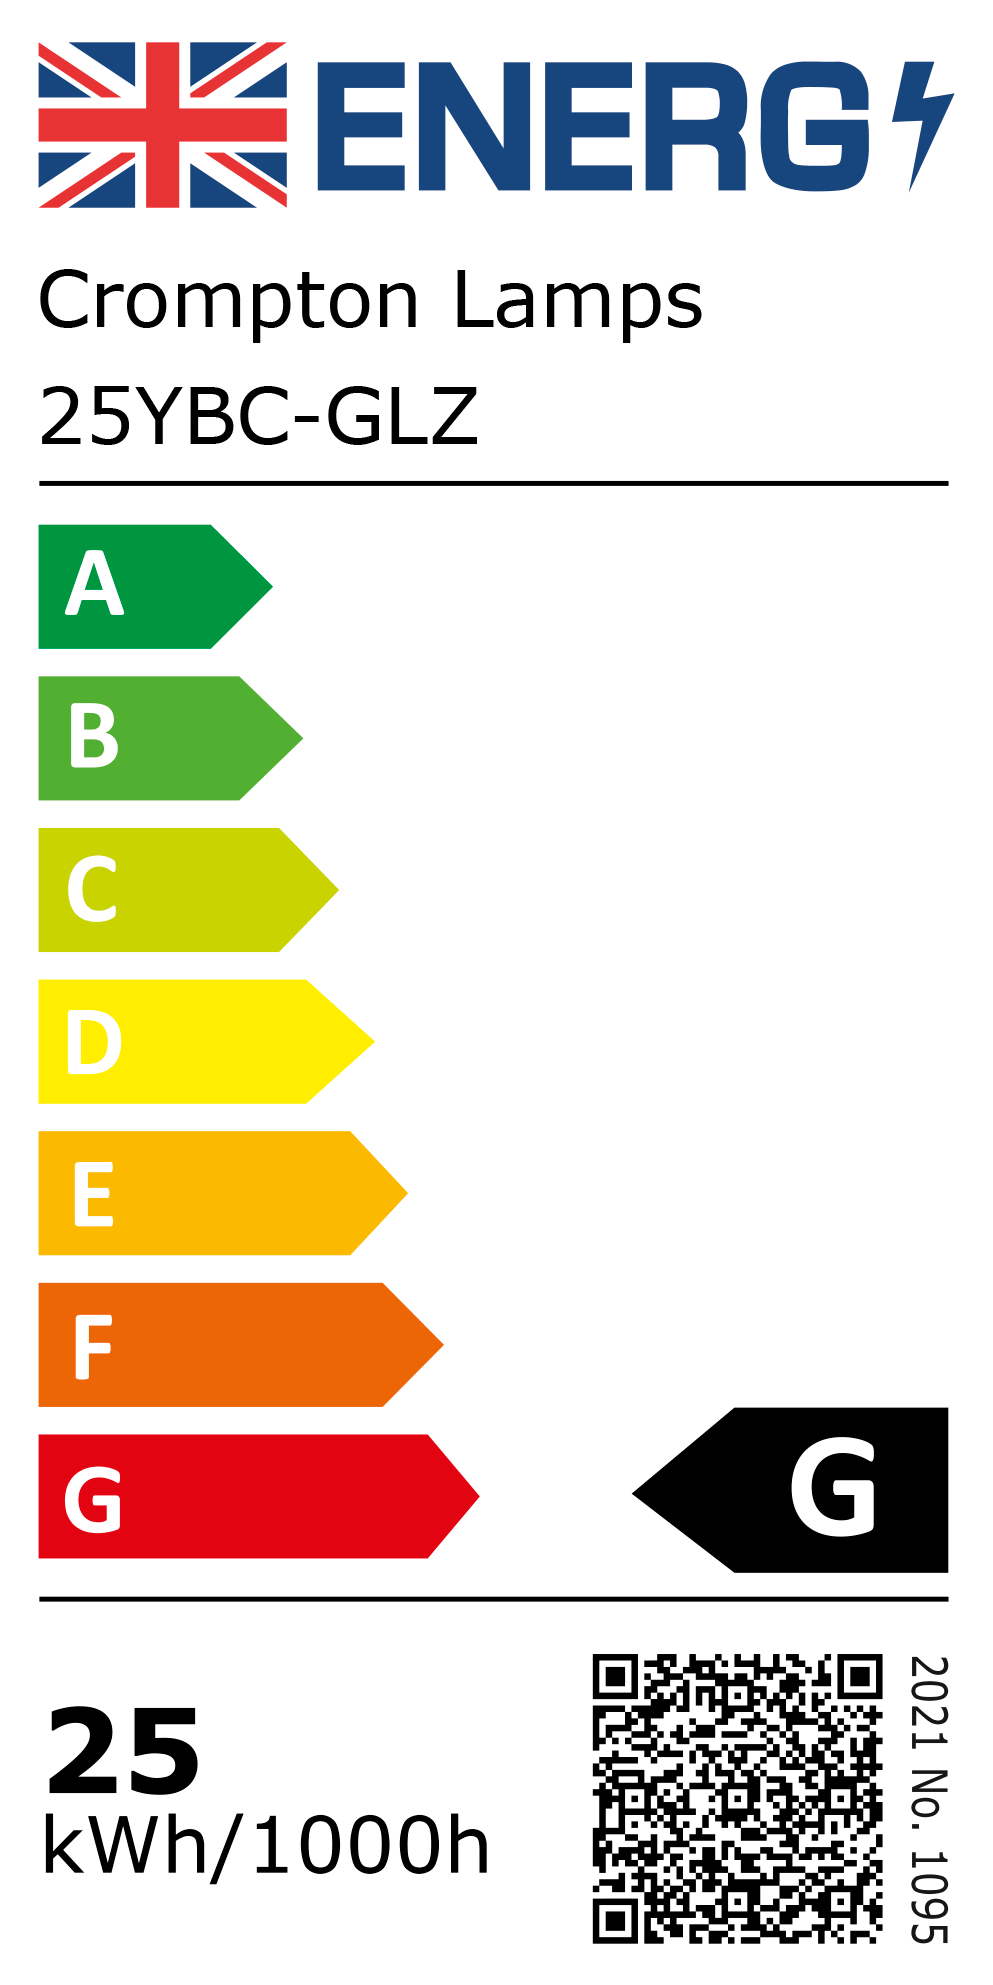 New 2021 Energy Rating Label: Stock Code 25YBC-GLZ